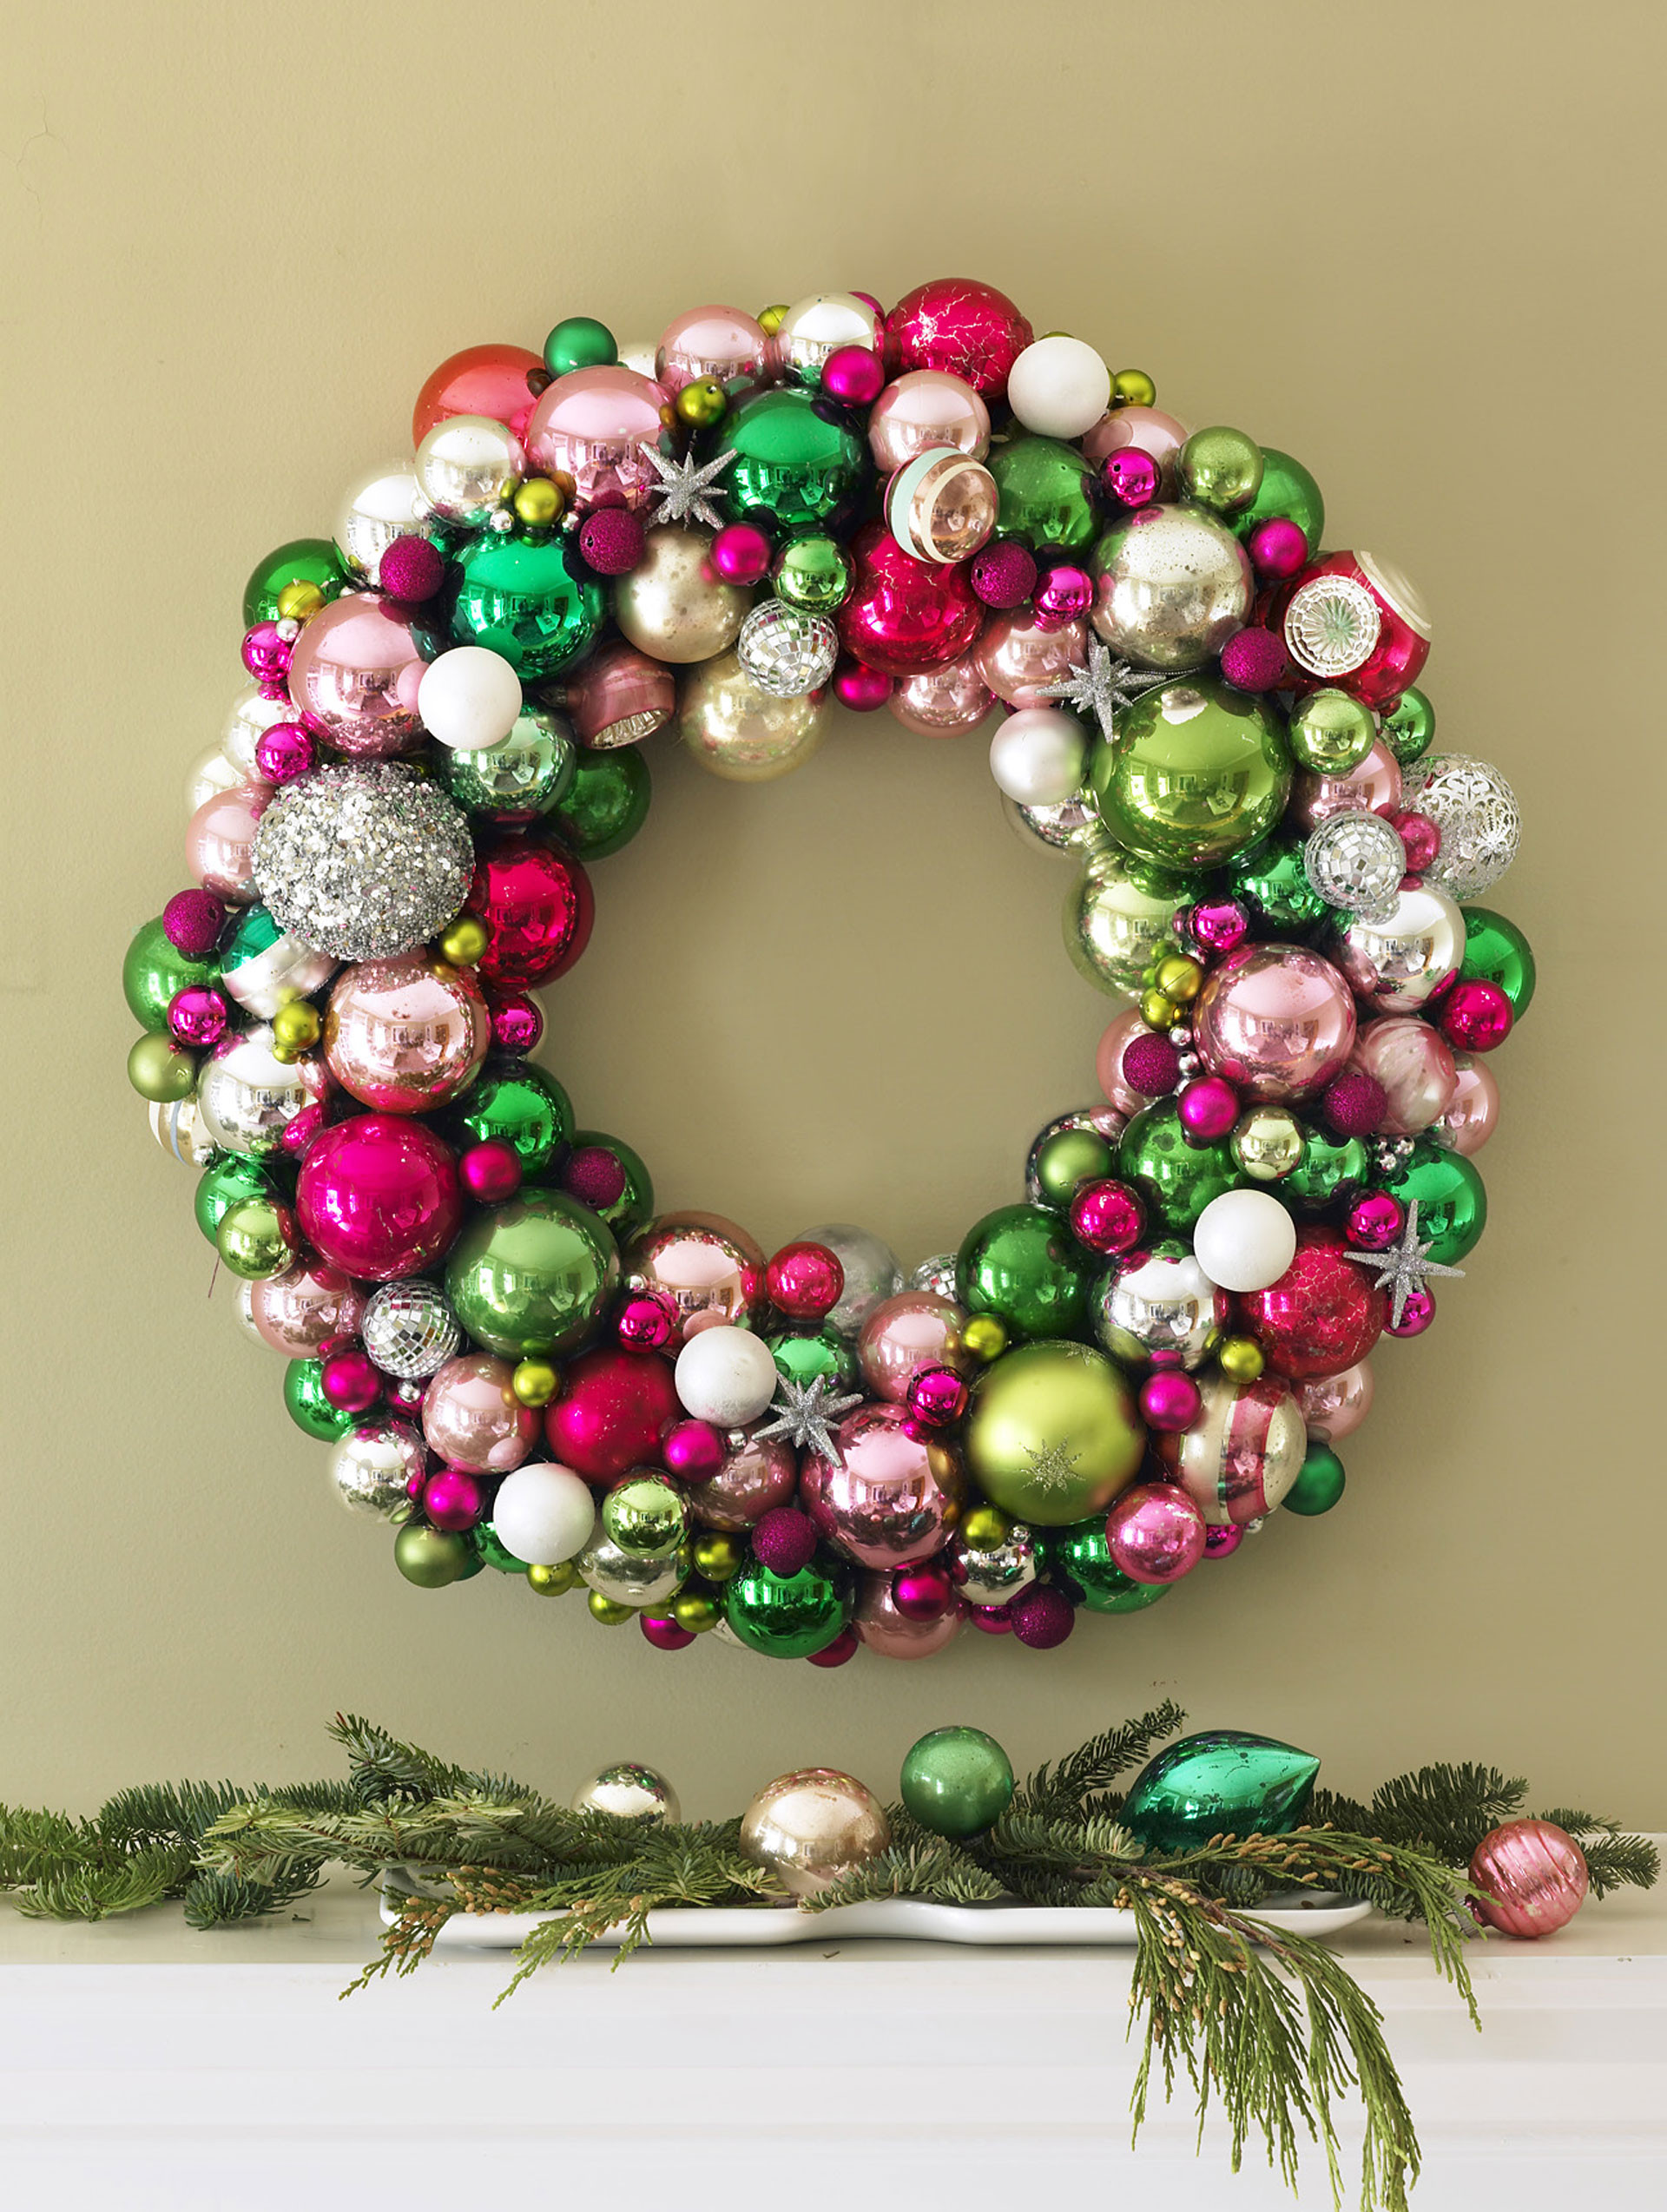 DIY Christmas Wreaths
 55 DIY Christmas Wreaths How to Make a Holiday Wreath Craft